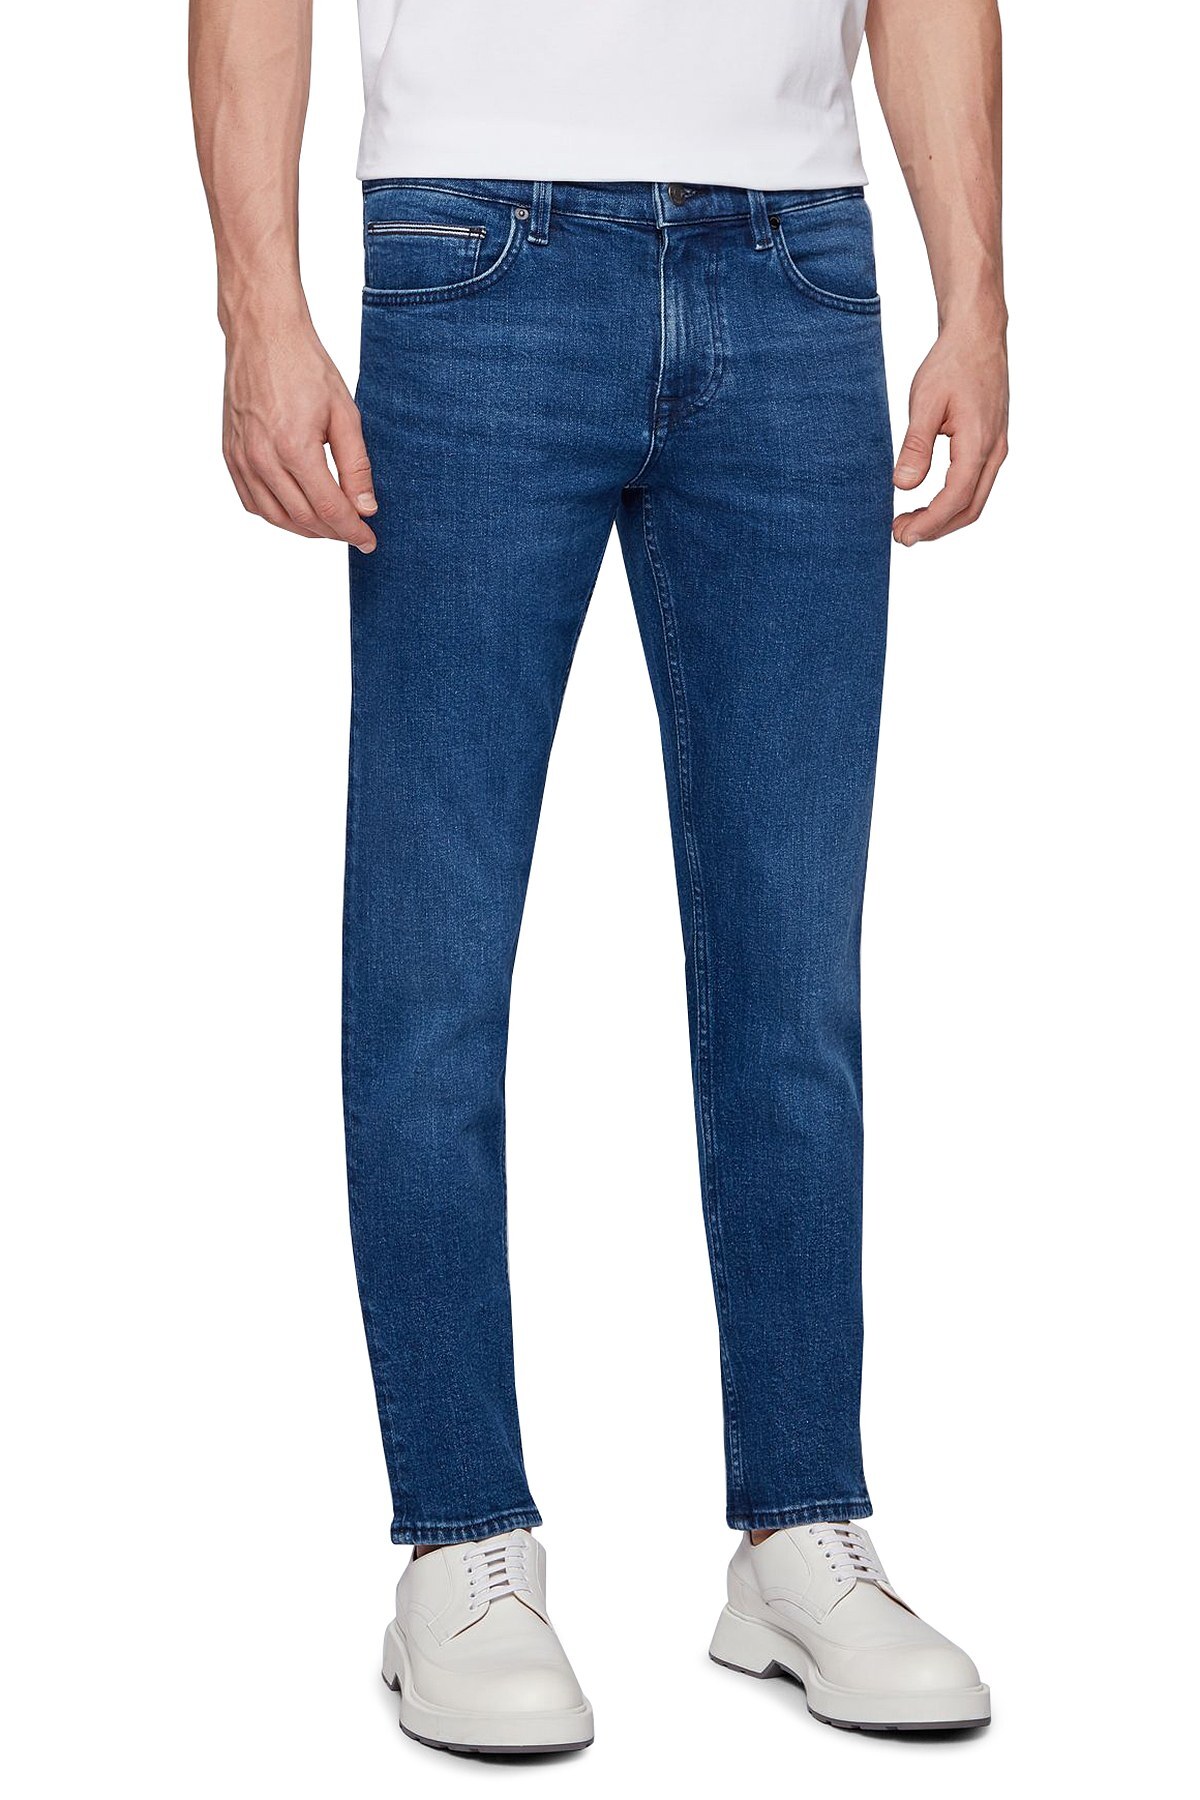 Hugo Boss Pamuklu Düşük Bel Extra Slim Fit Jeans Erkek Kot Pantolon 50443976 415 LACİVERT